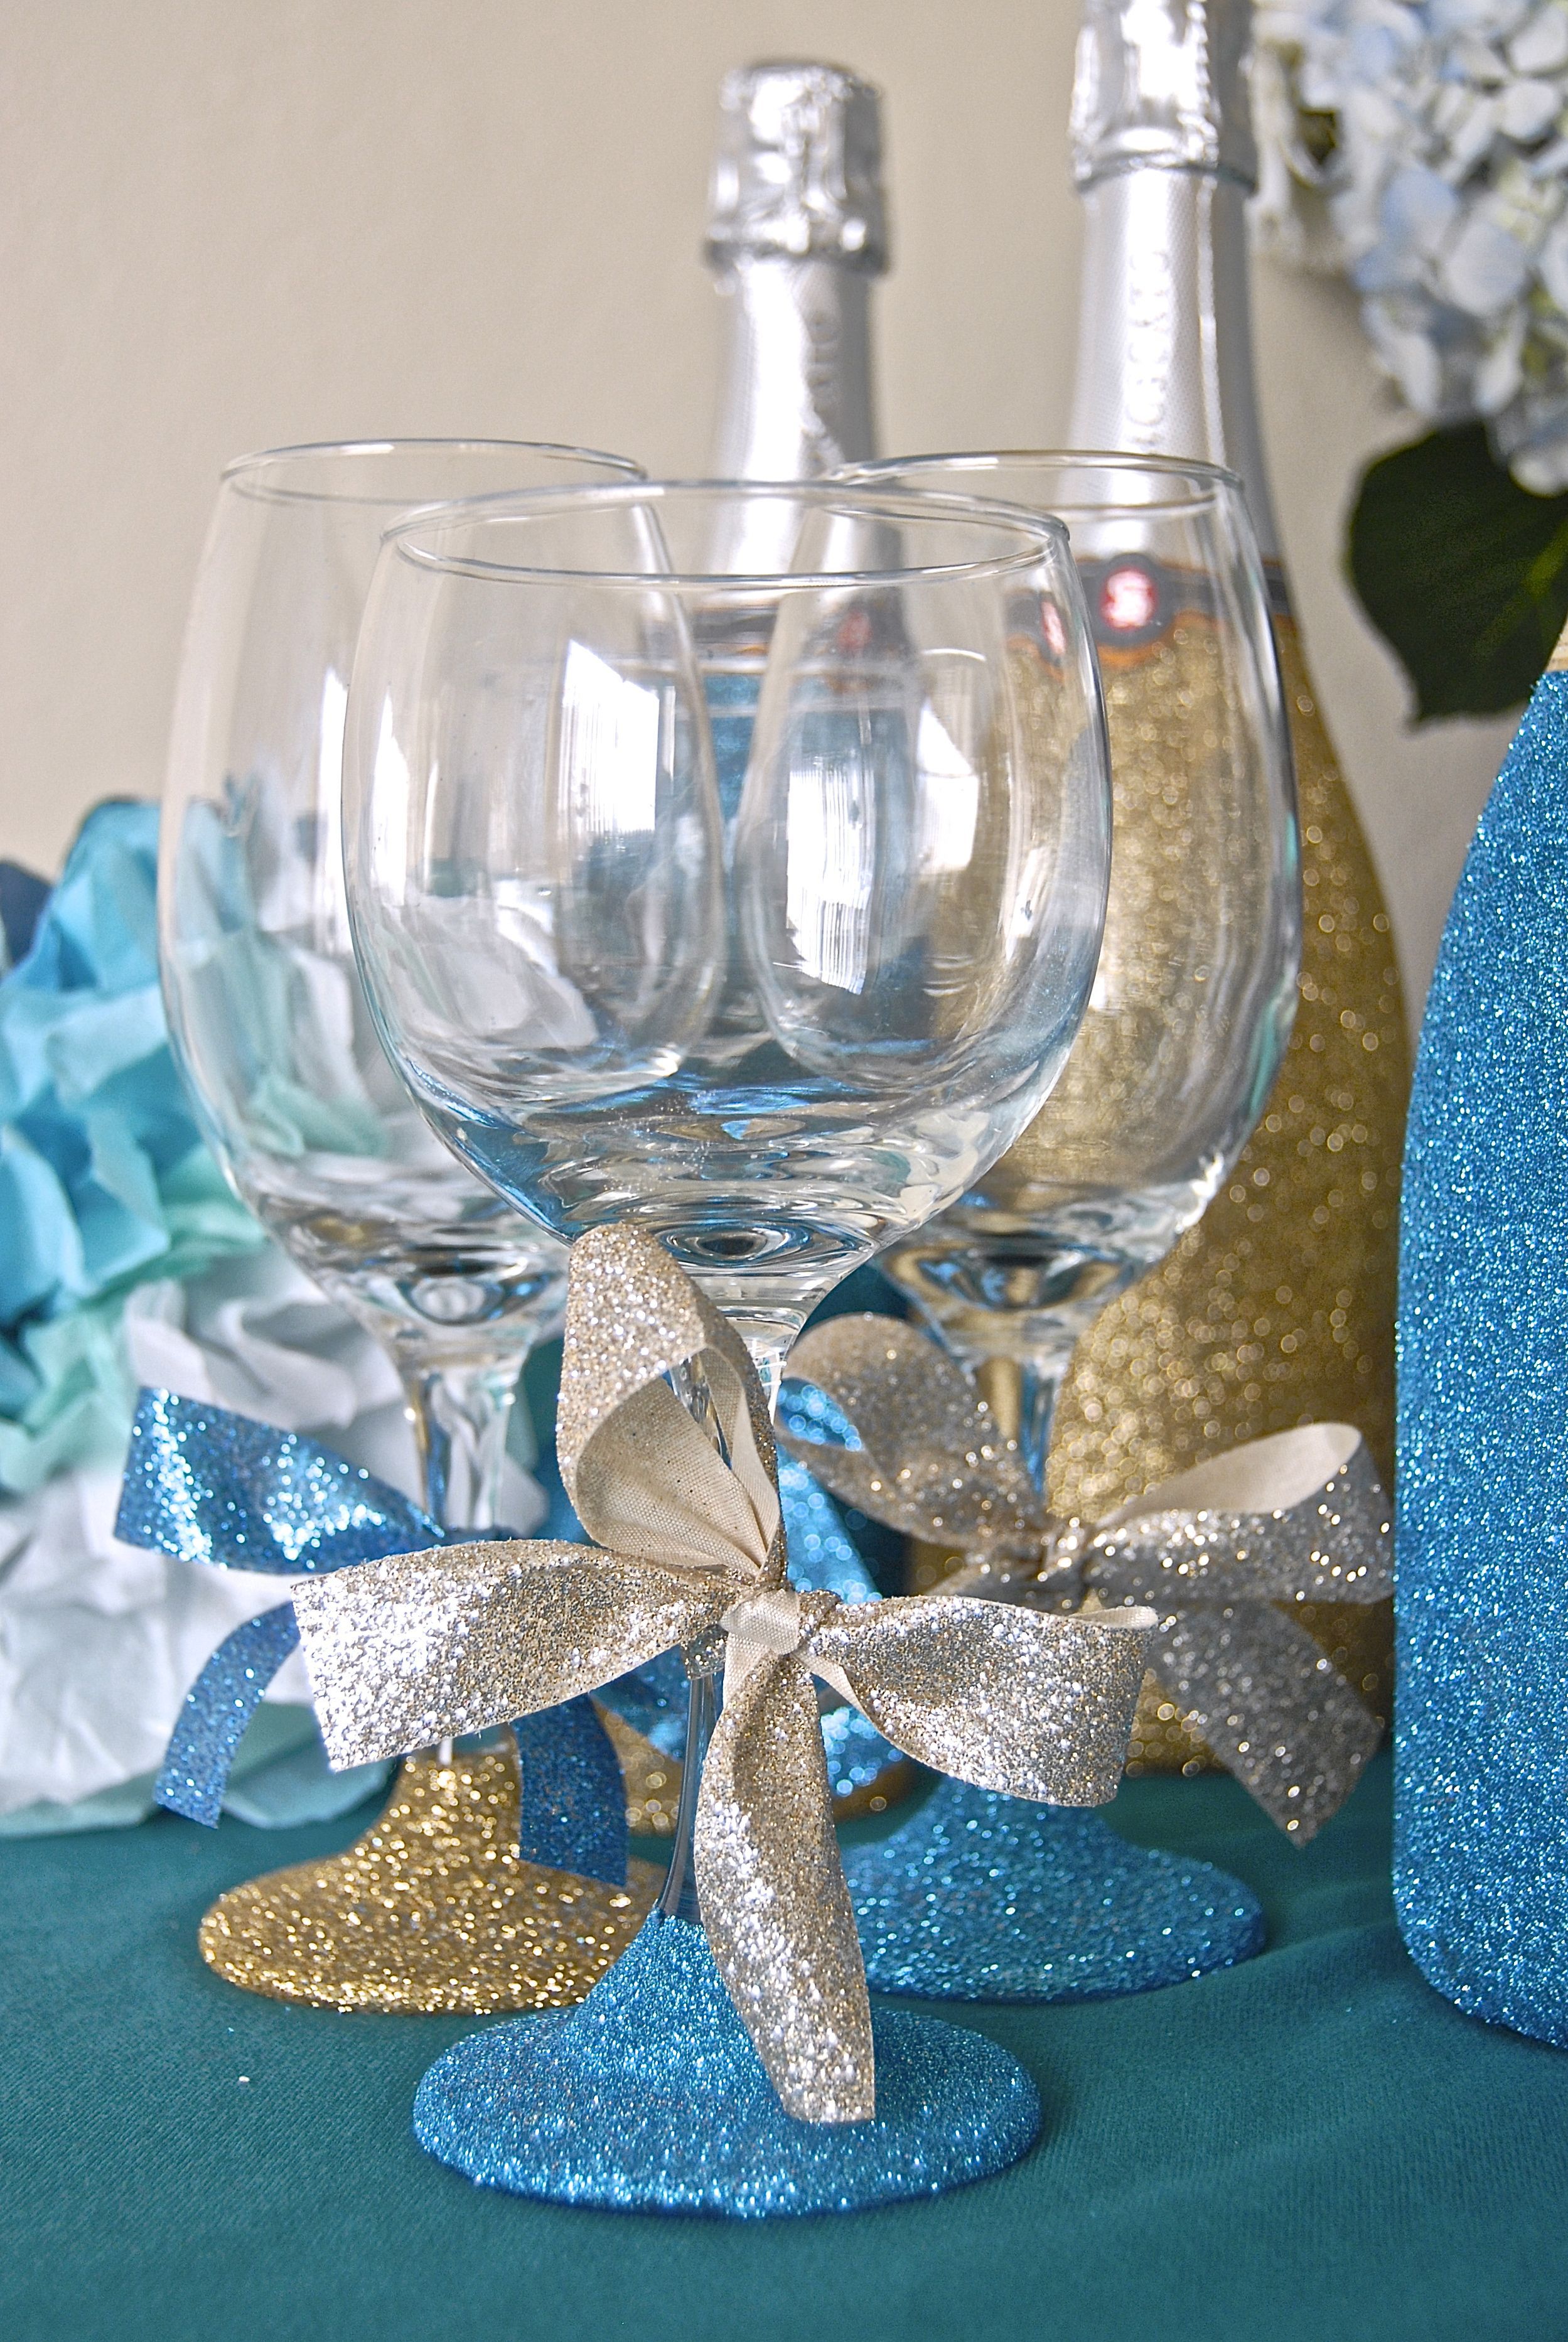 Glitter Bridal Shower Favors — Decorate wine glasses